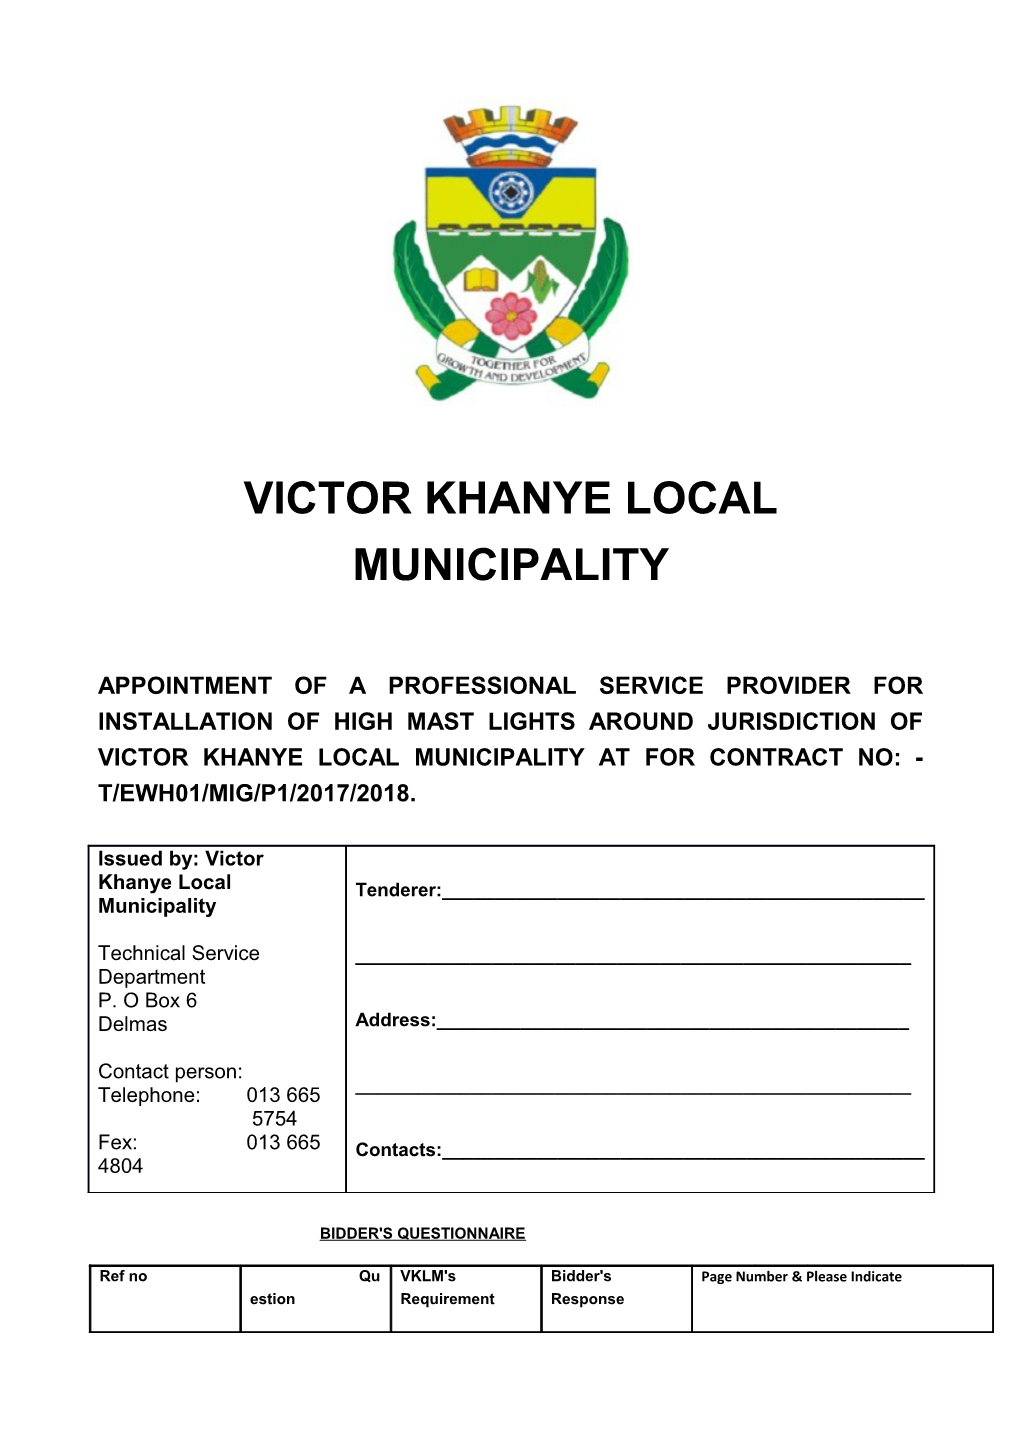 Victor Khanye Local Municipality